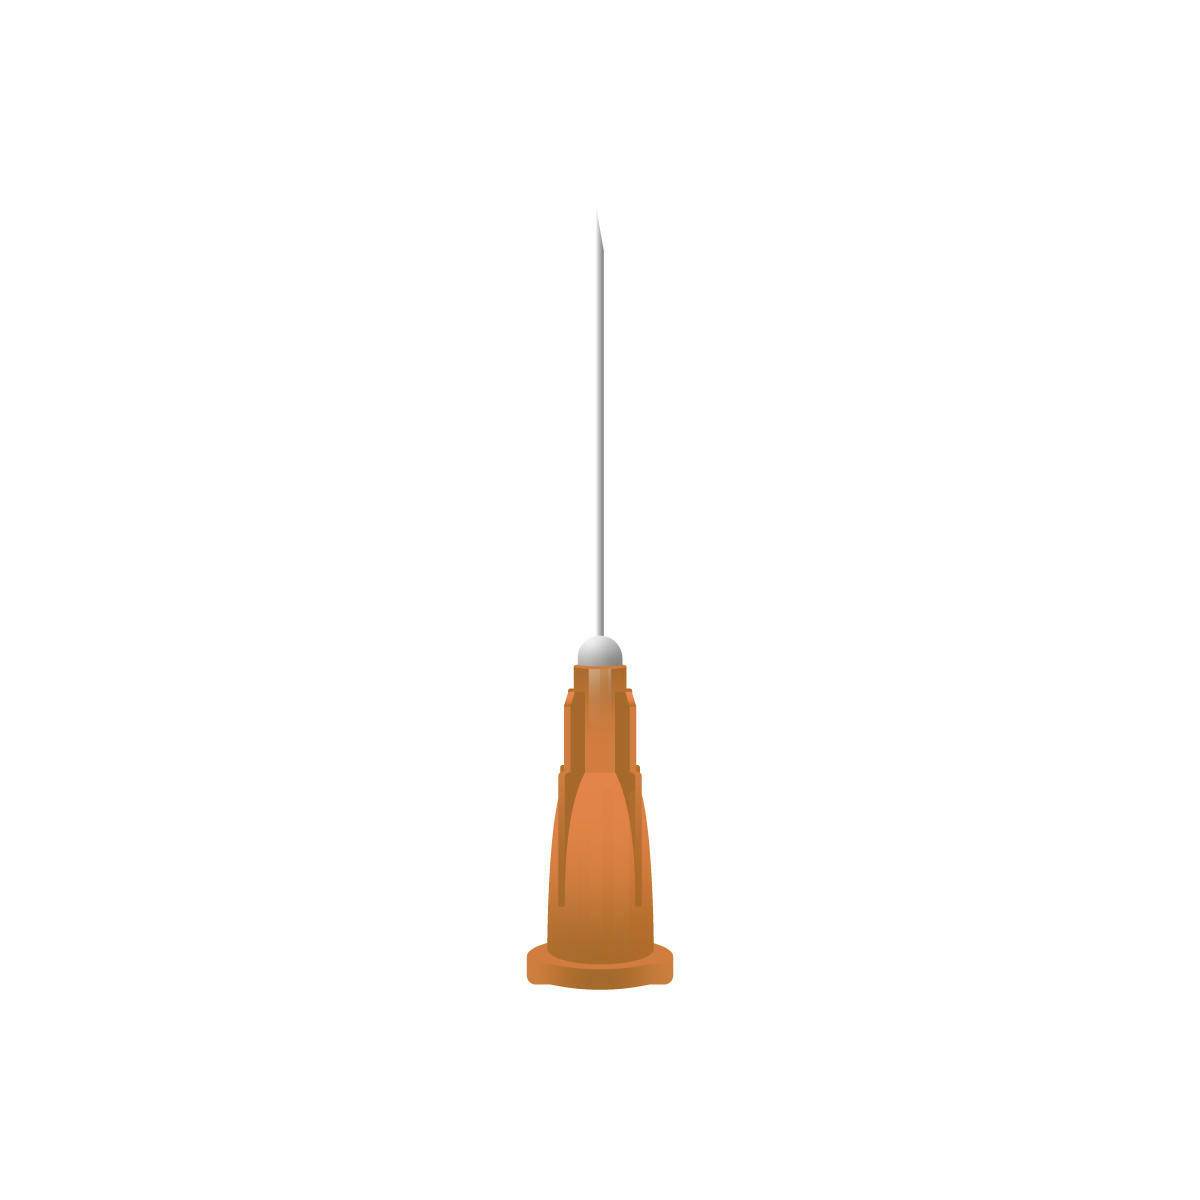 25g Orange 1 inch BD Microlance Needles